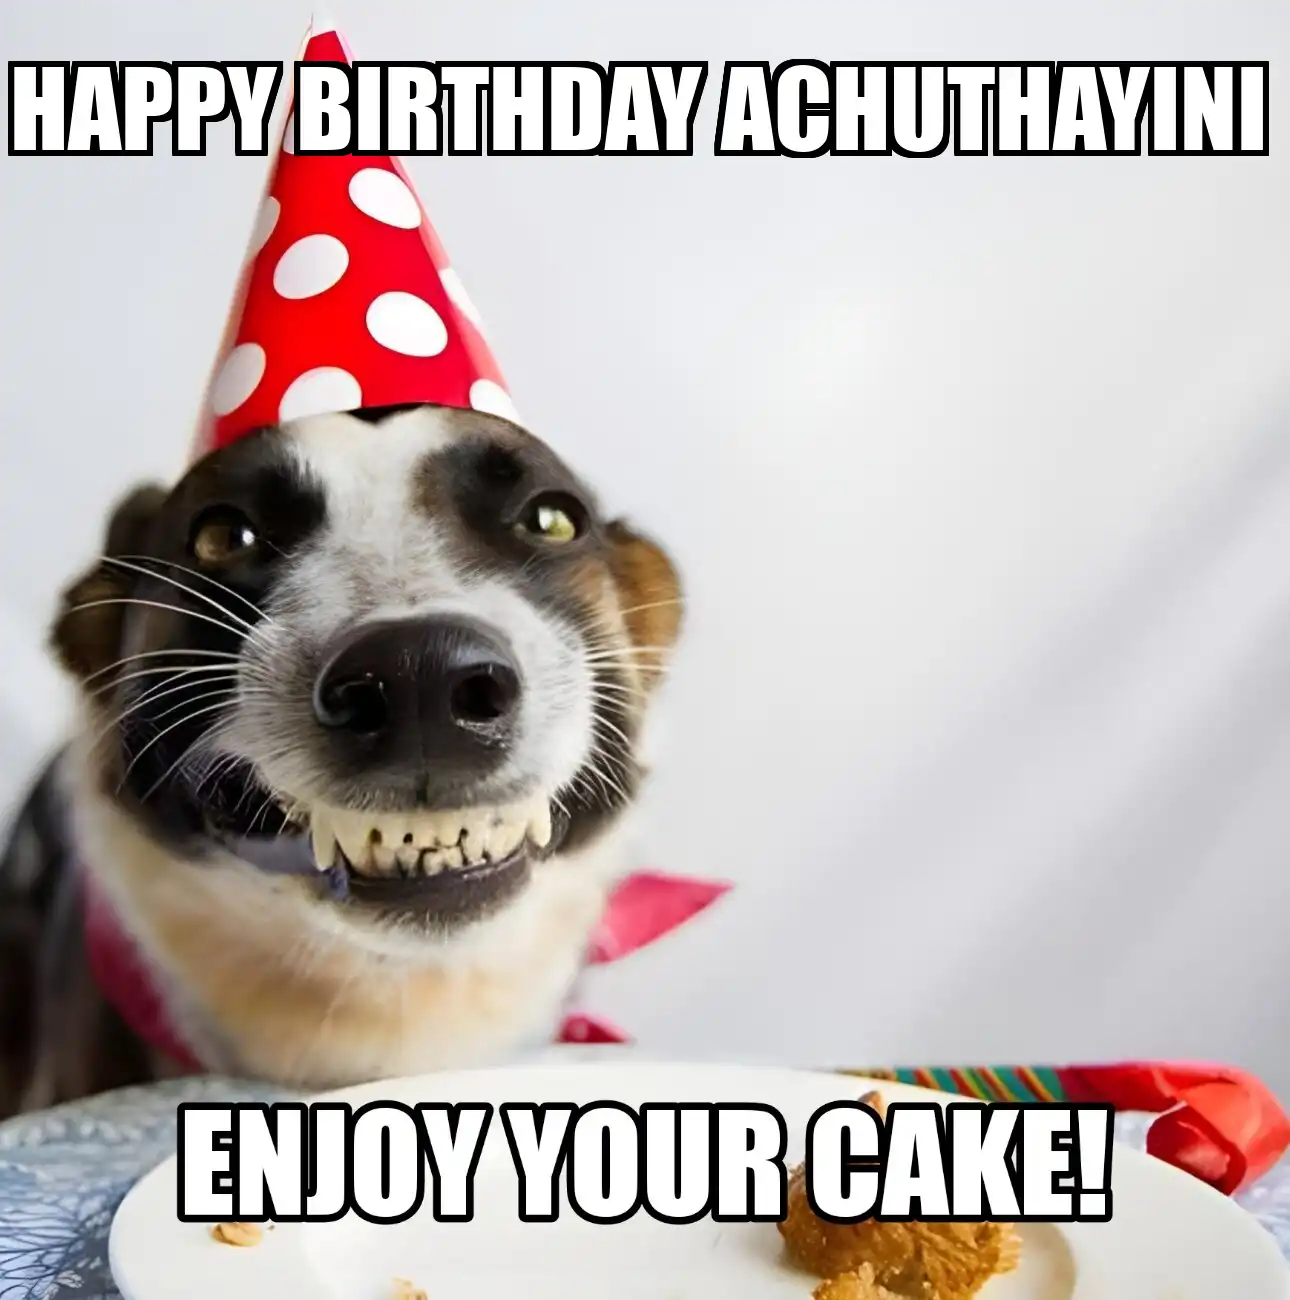 Happy Birthday Achuthayini Enjoy Your Cake Dog Meme